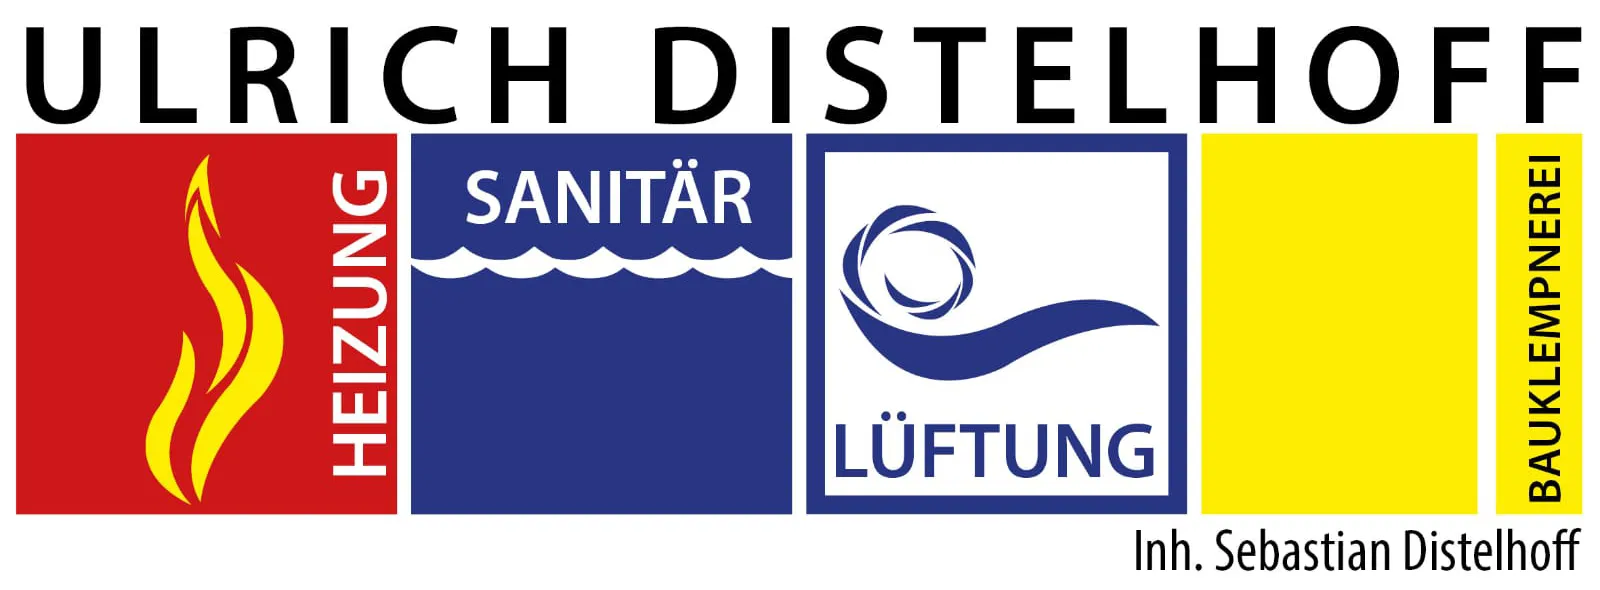 Distelhoff_Logo.jpg